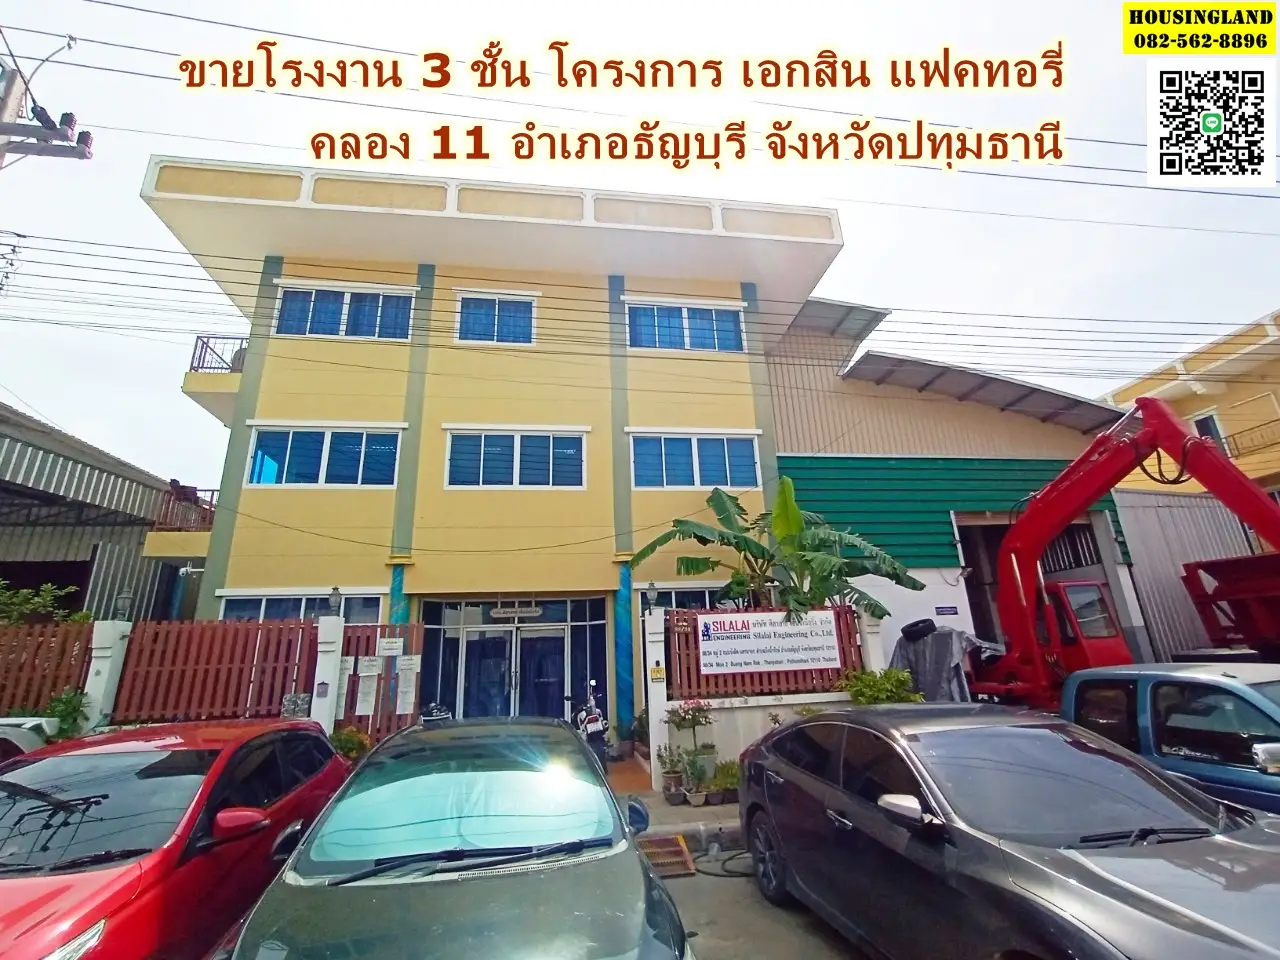 3-storey factory for sale, Eksin Factory Project, Khlong 11, Bueng Nam Rak Subdistrict, Thanyaburi District, Pathum Thani Province